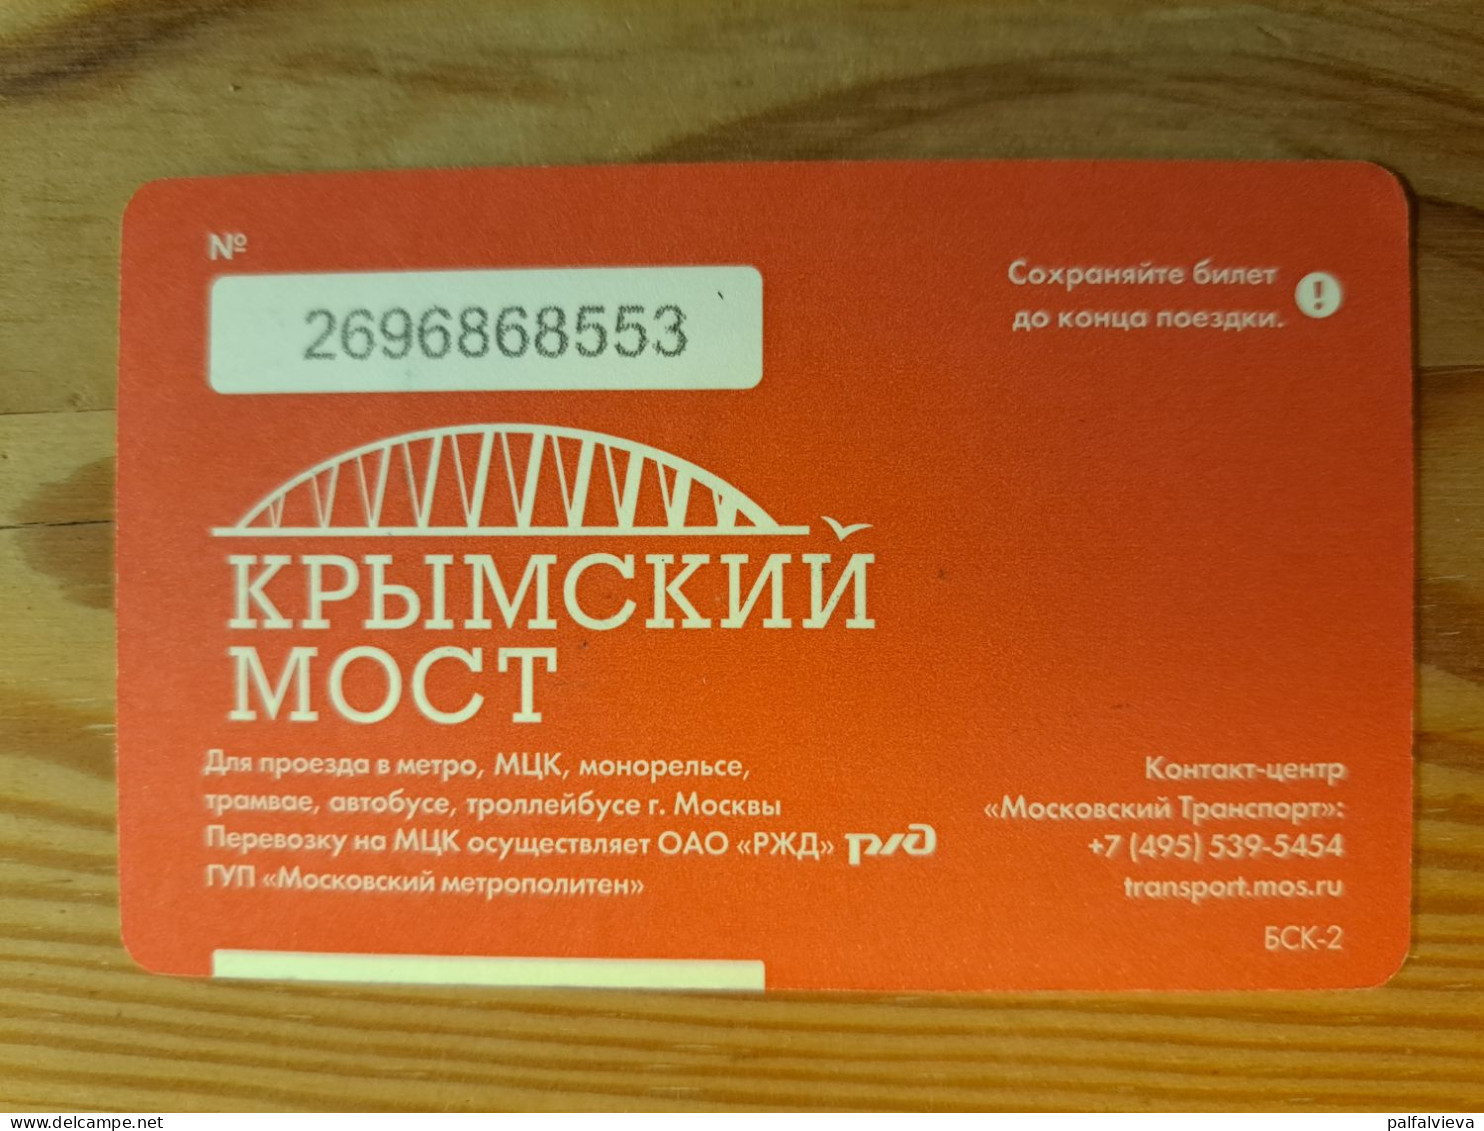 Transport Ticket Russia, Moscow - Bridge - Europe